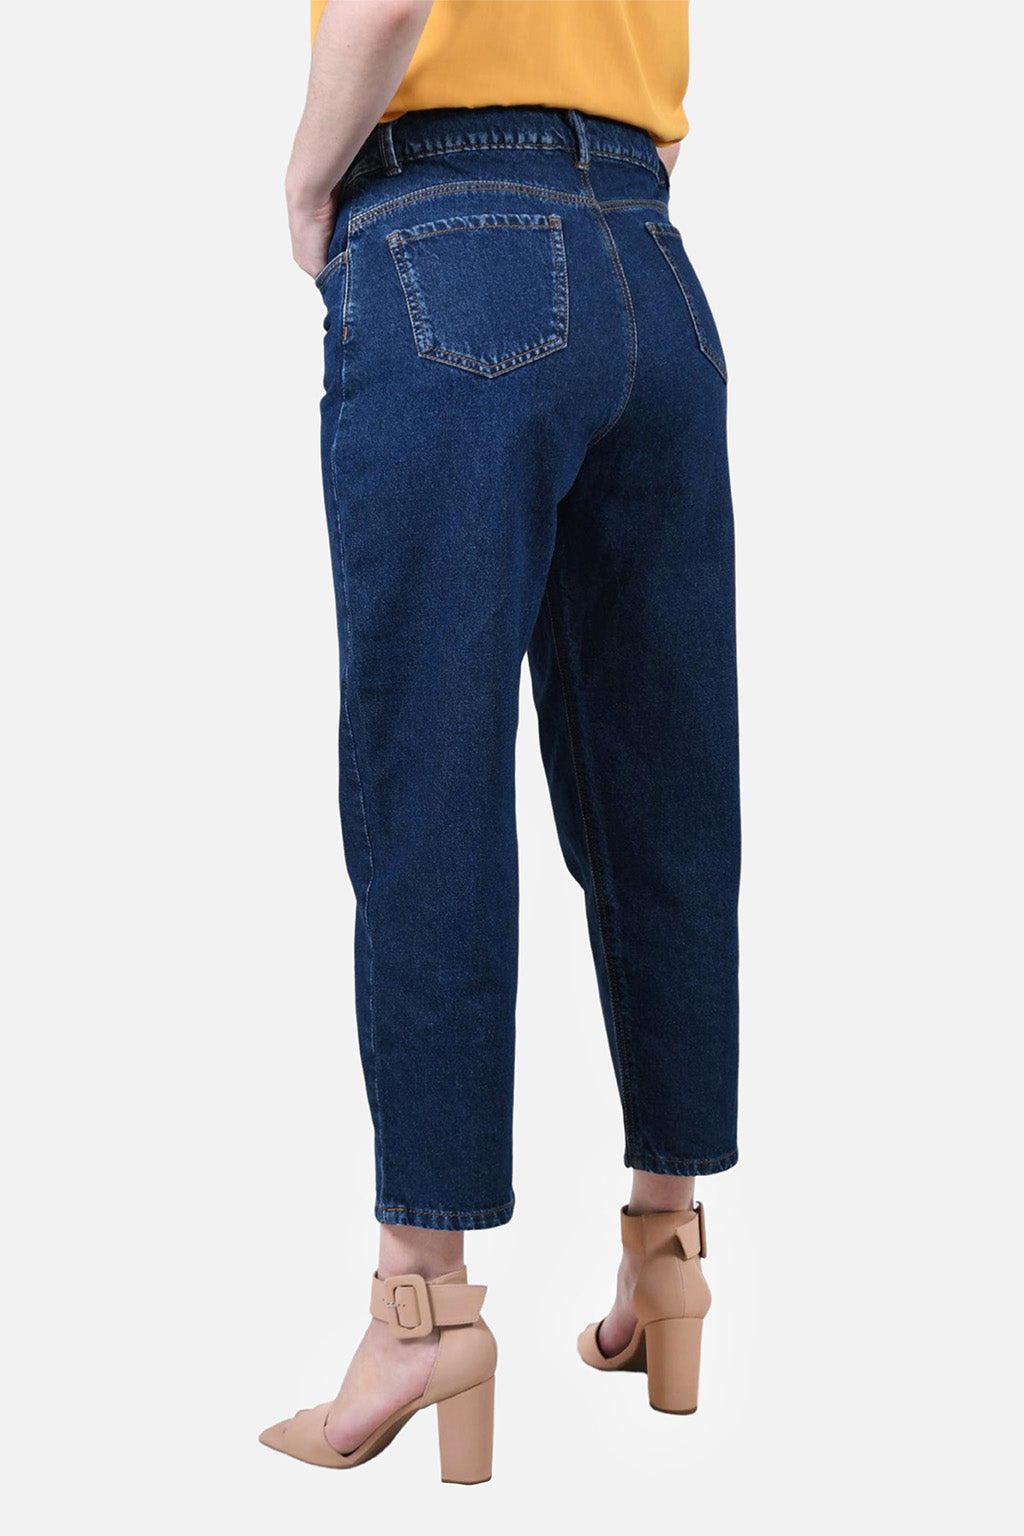 Pantalon Billie Azul Navy